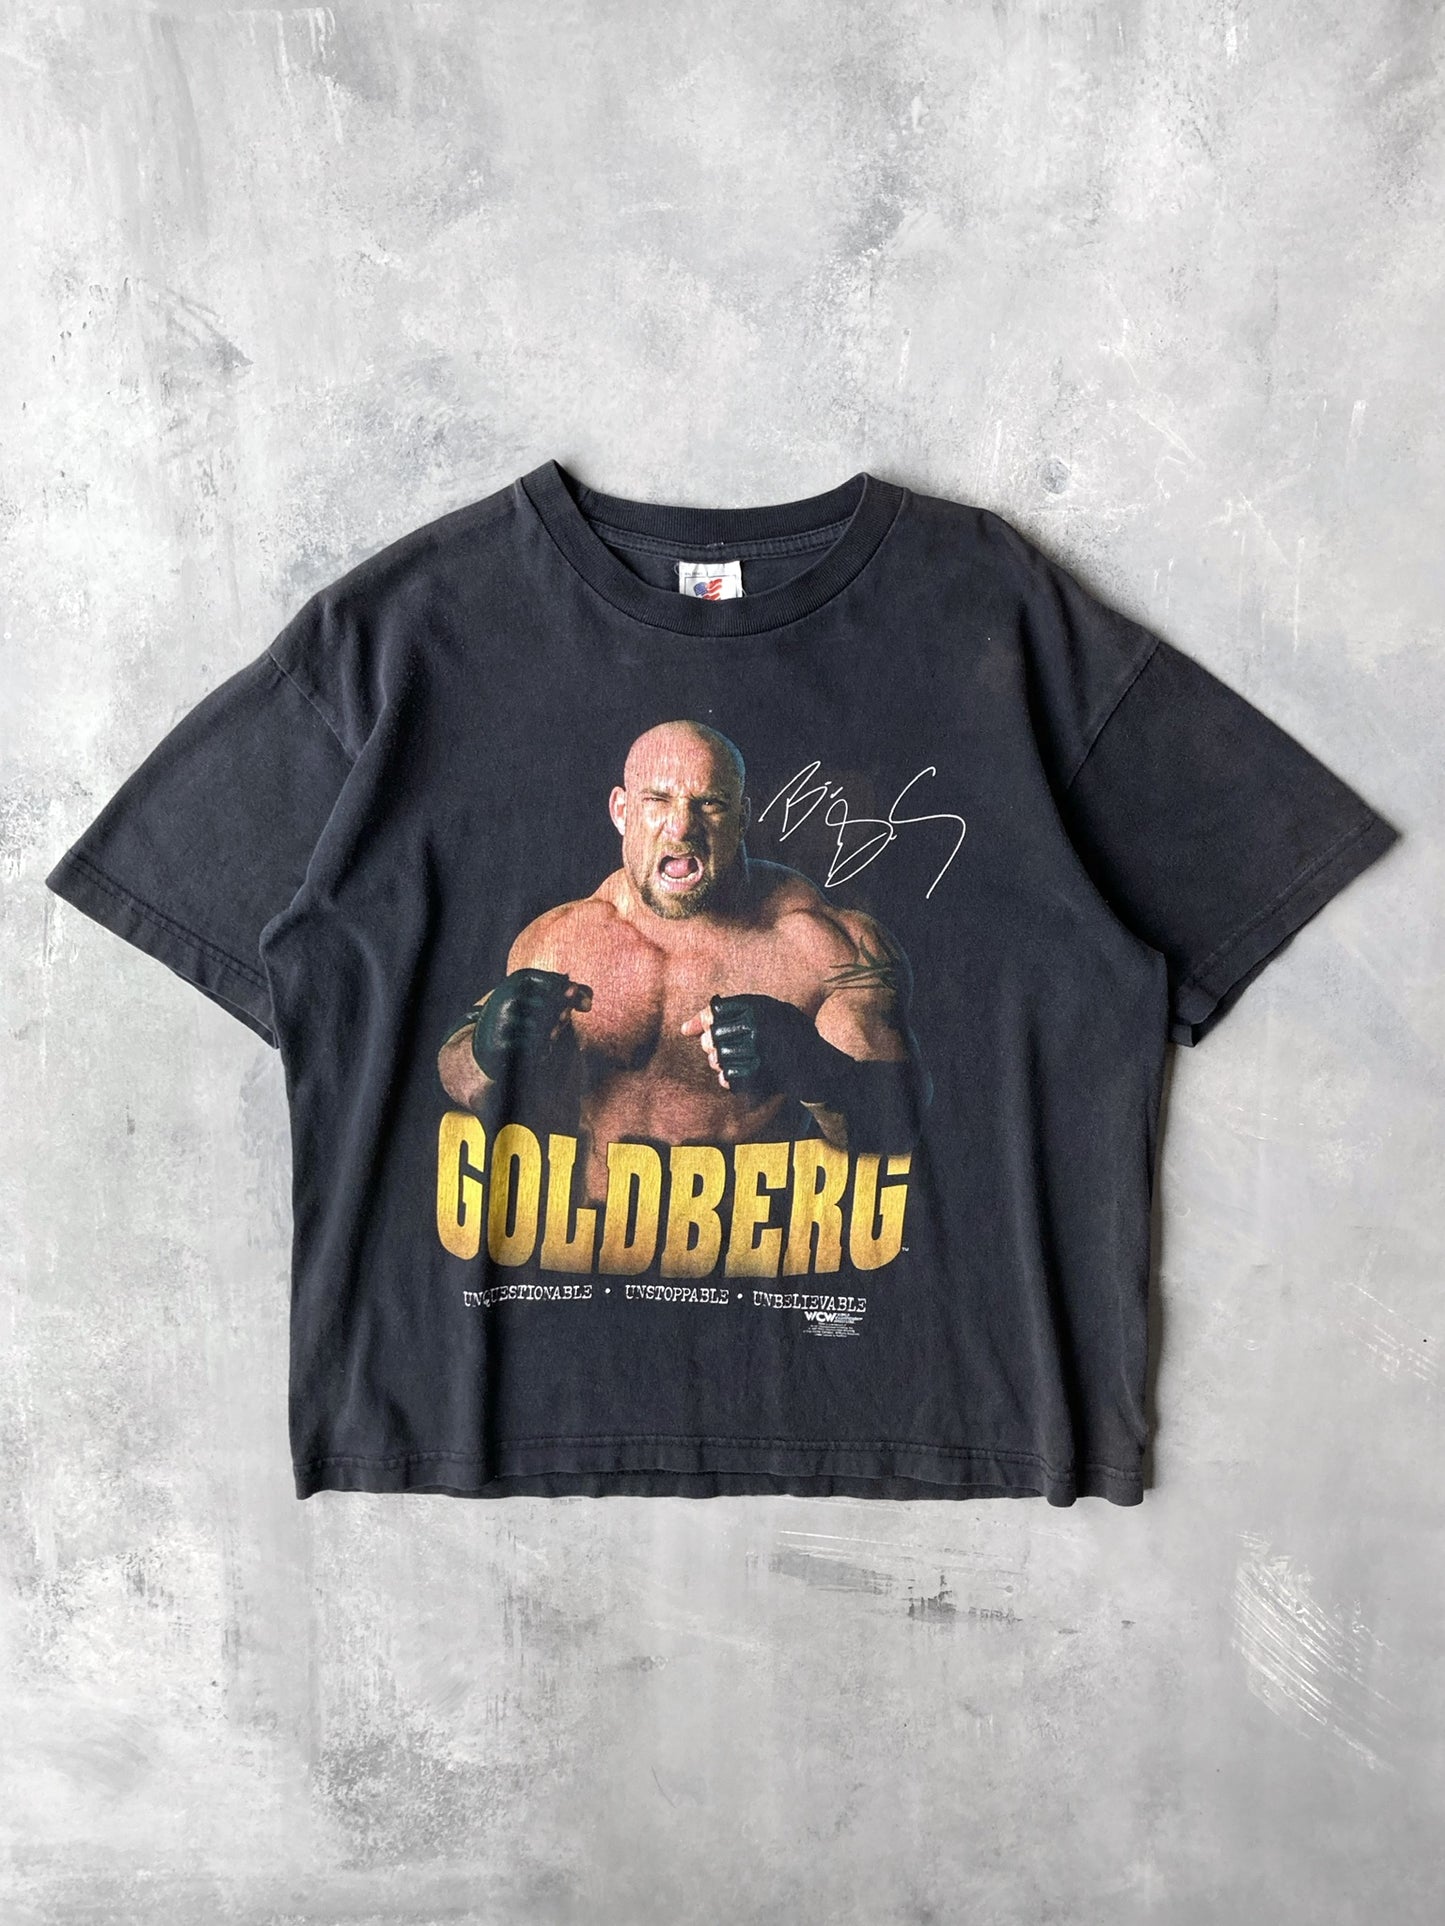 Goldberg Wrestling T-Shirt '98 - Small / Medium